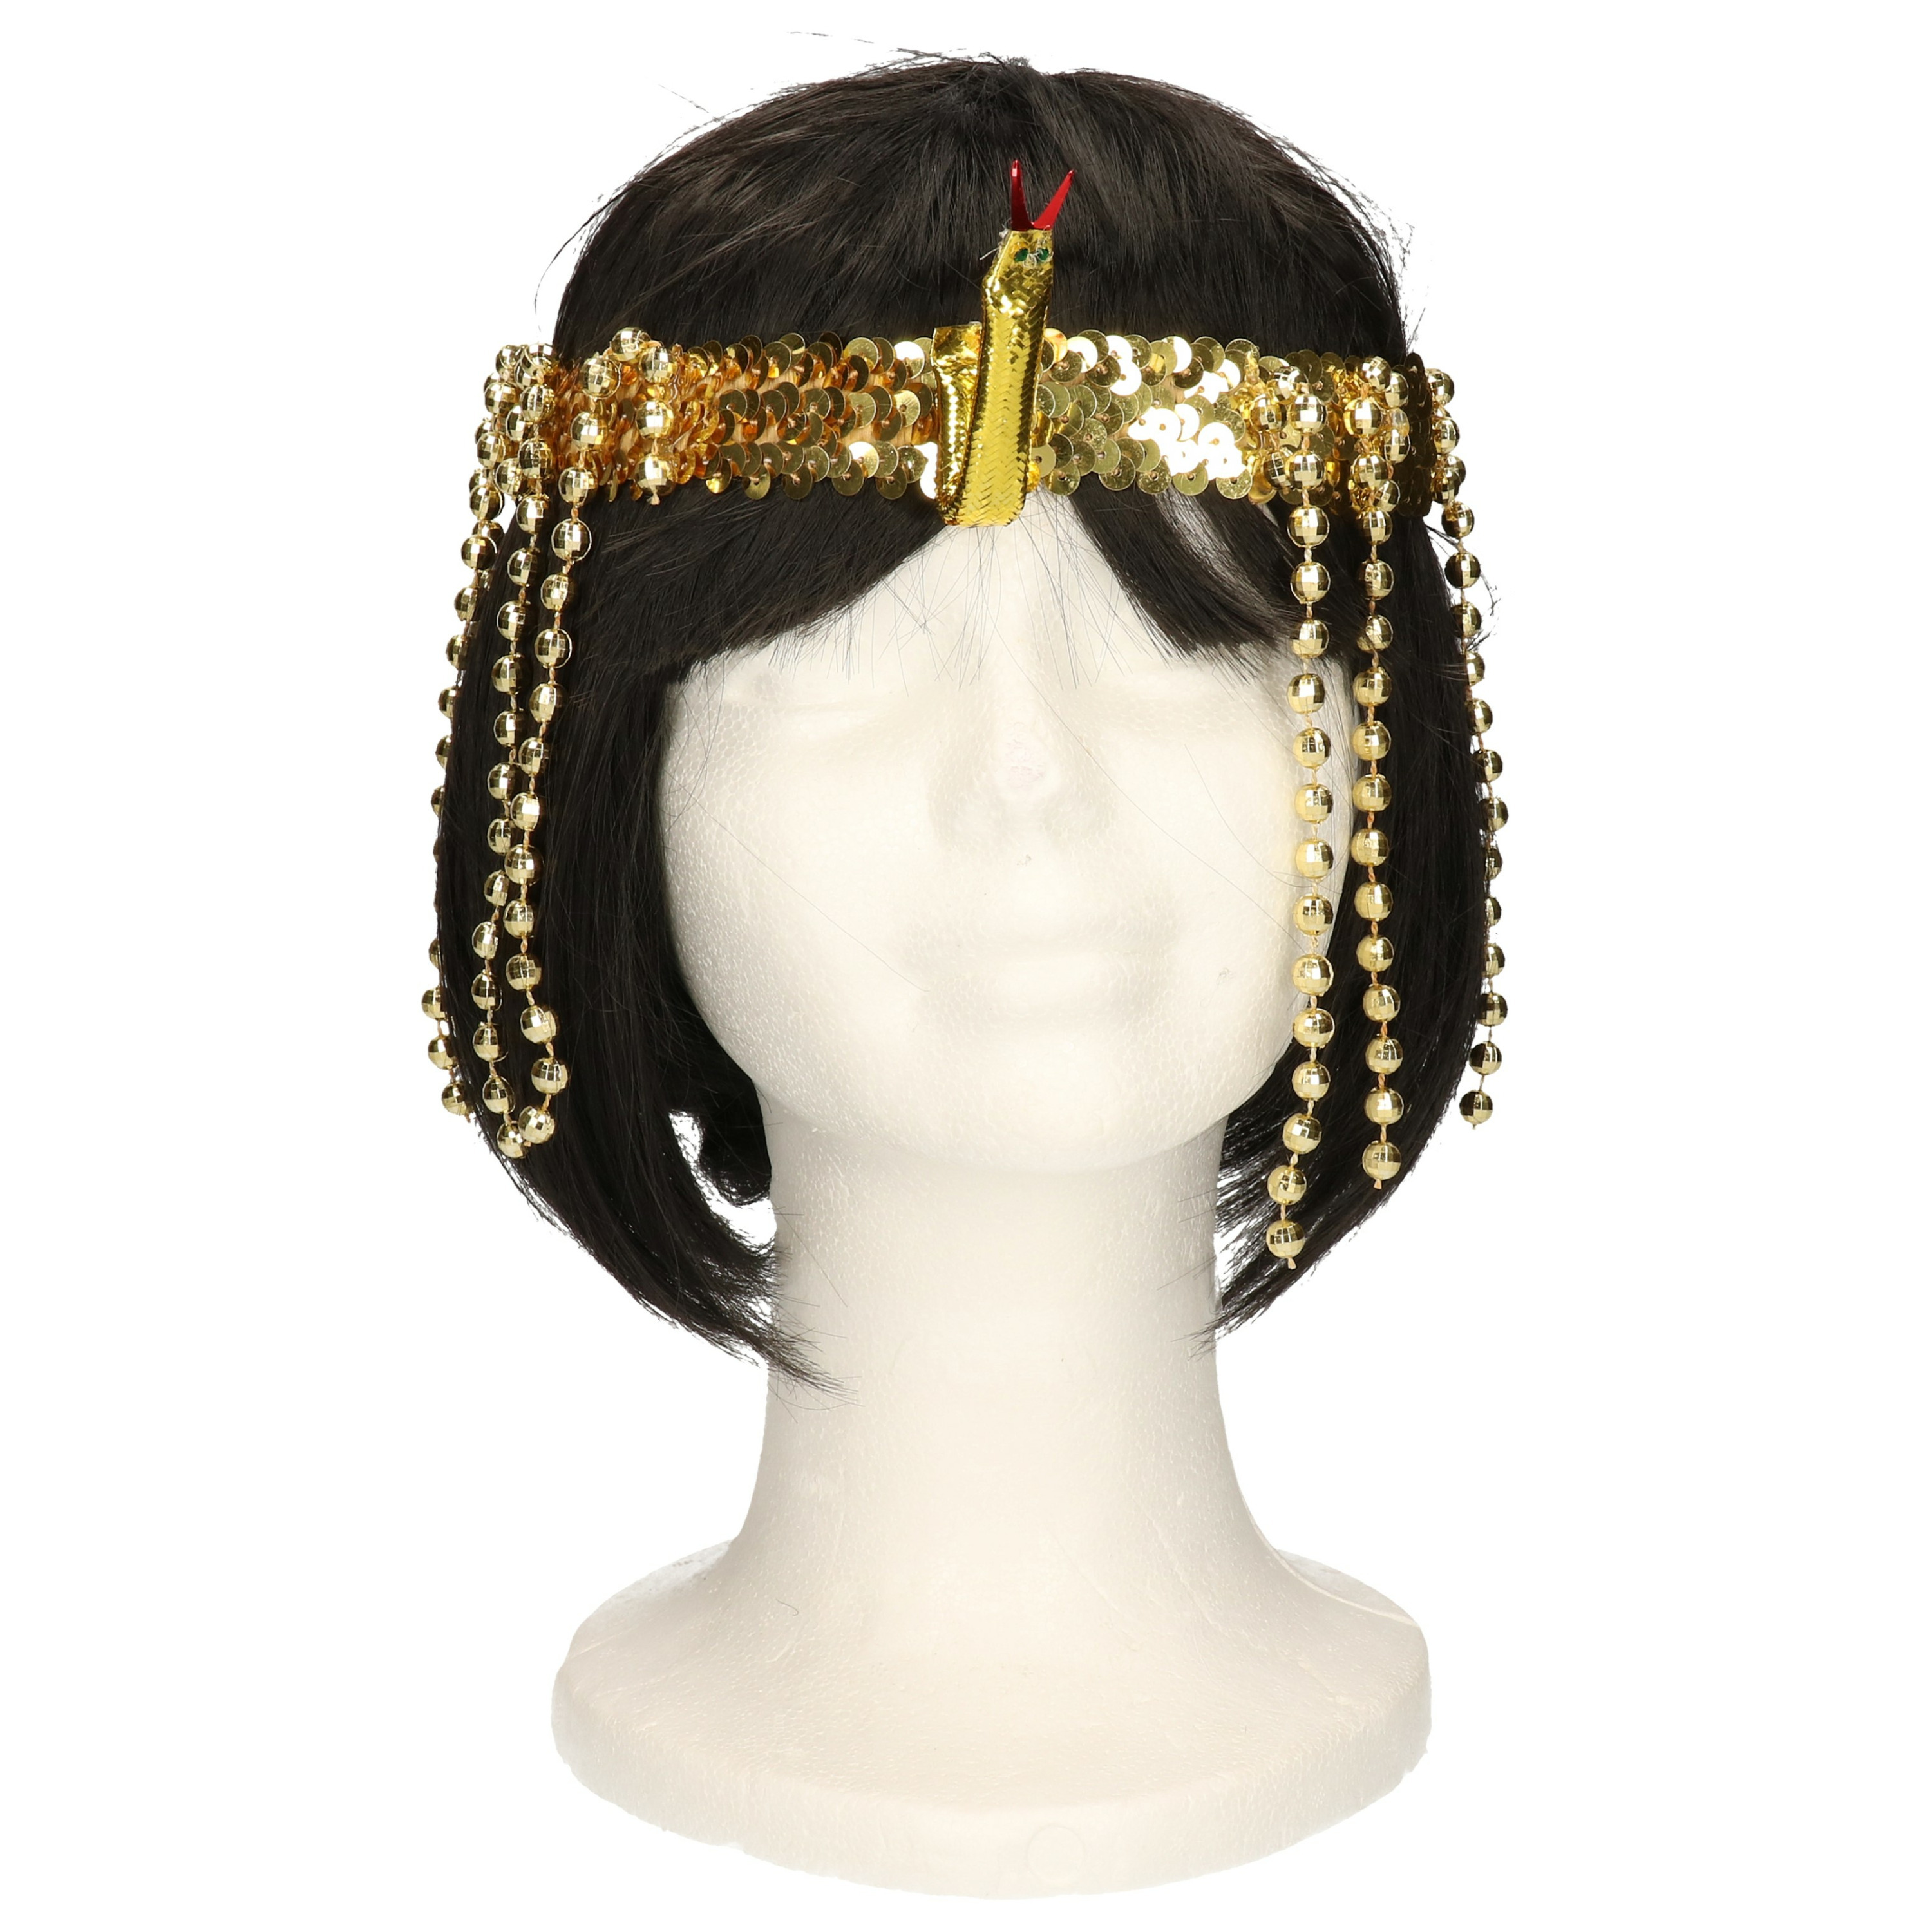 Verkleed hoofdband goud Egyptisch-1001 nacht-Cleopatra thema